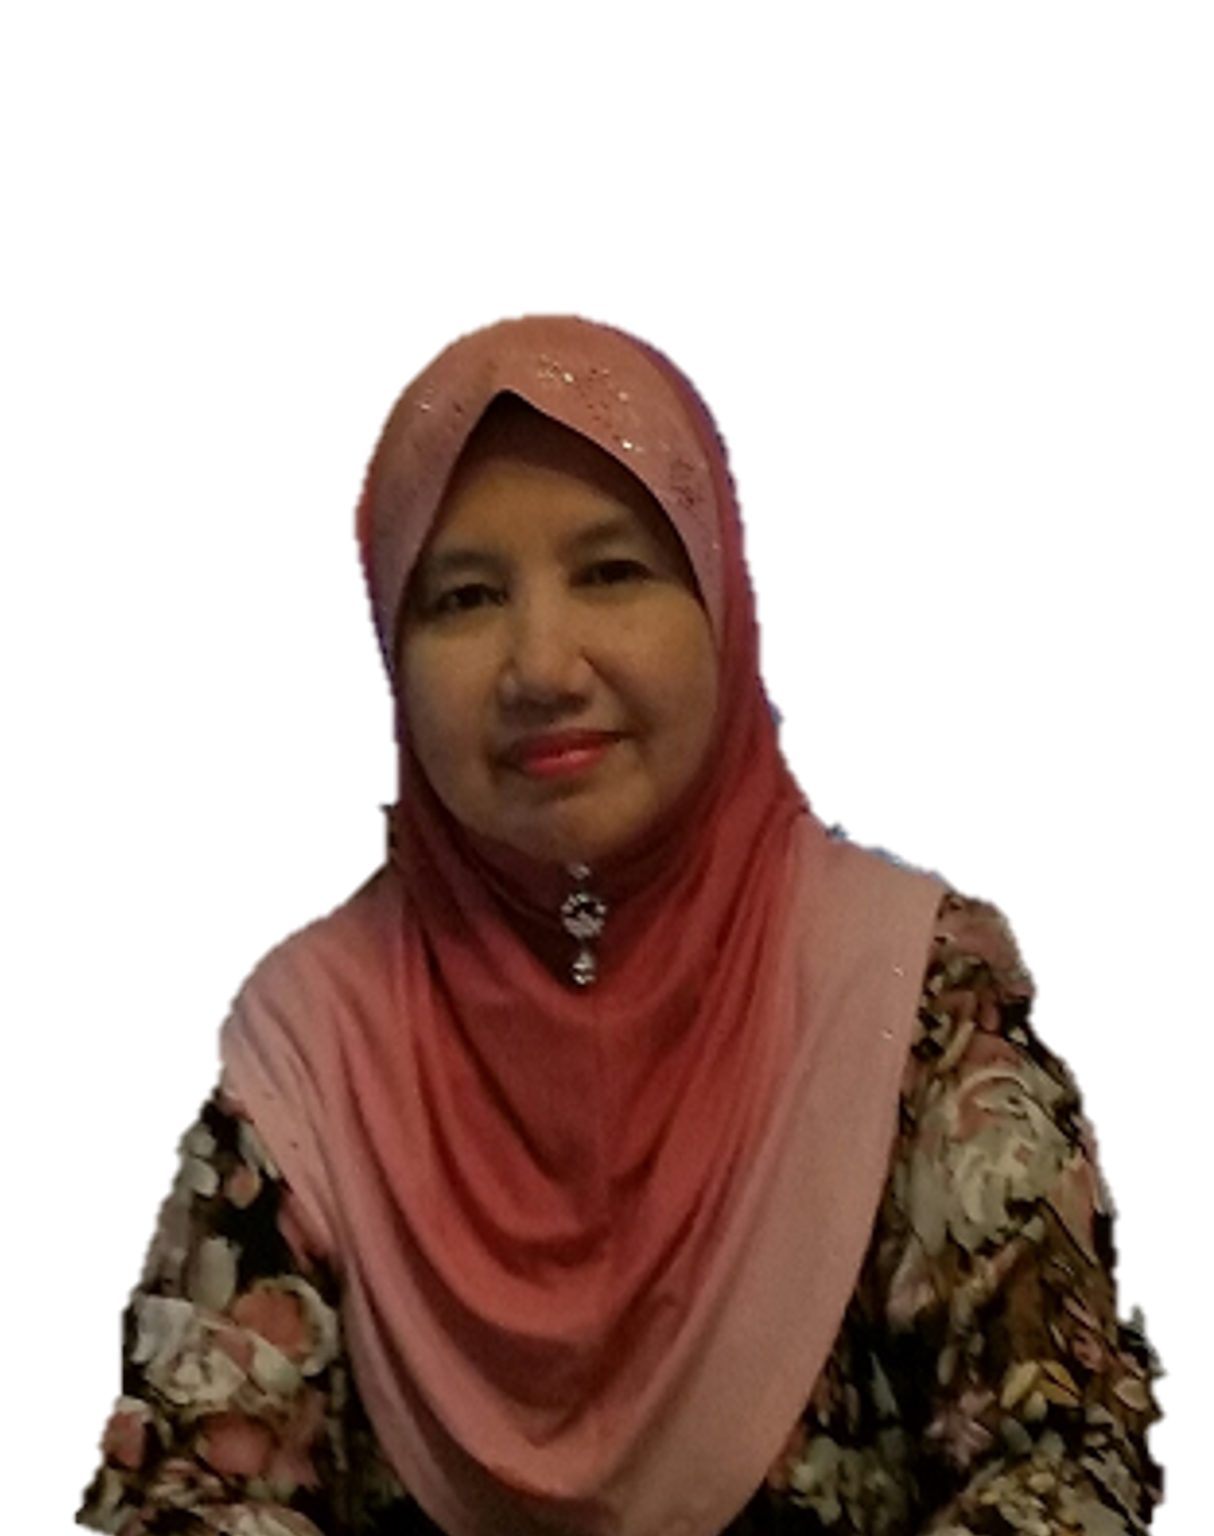 Assoc. Prof. Dr. Saiful Hafizah Jaaman : Associate Professor